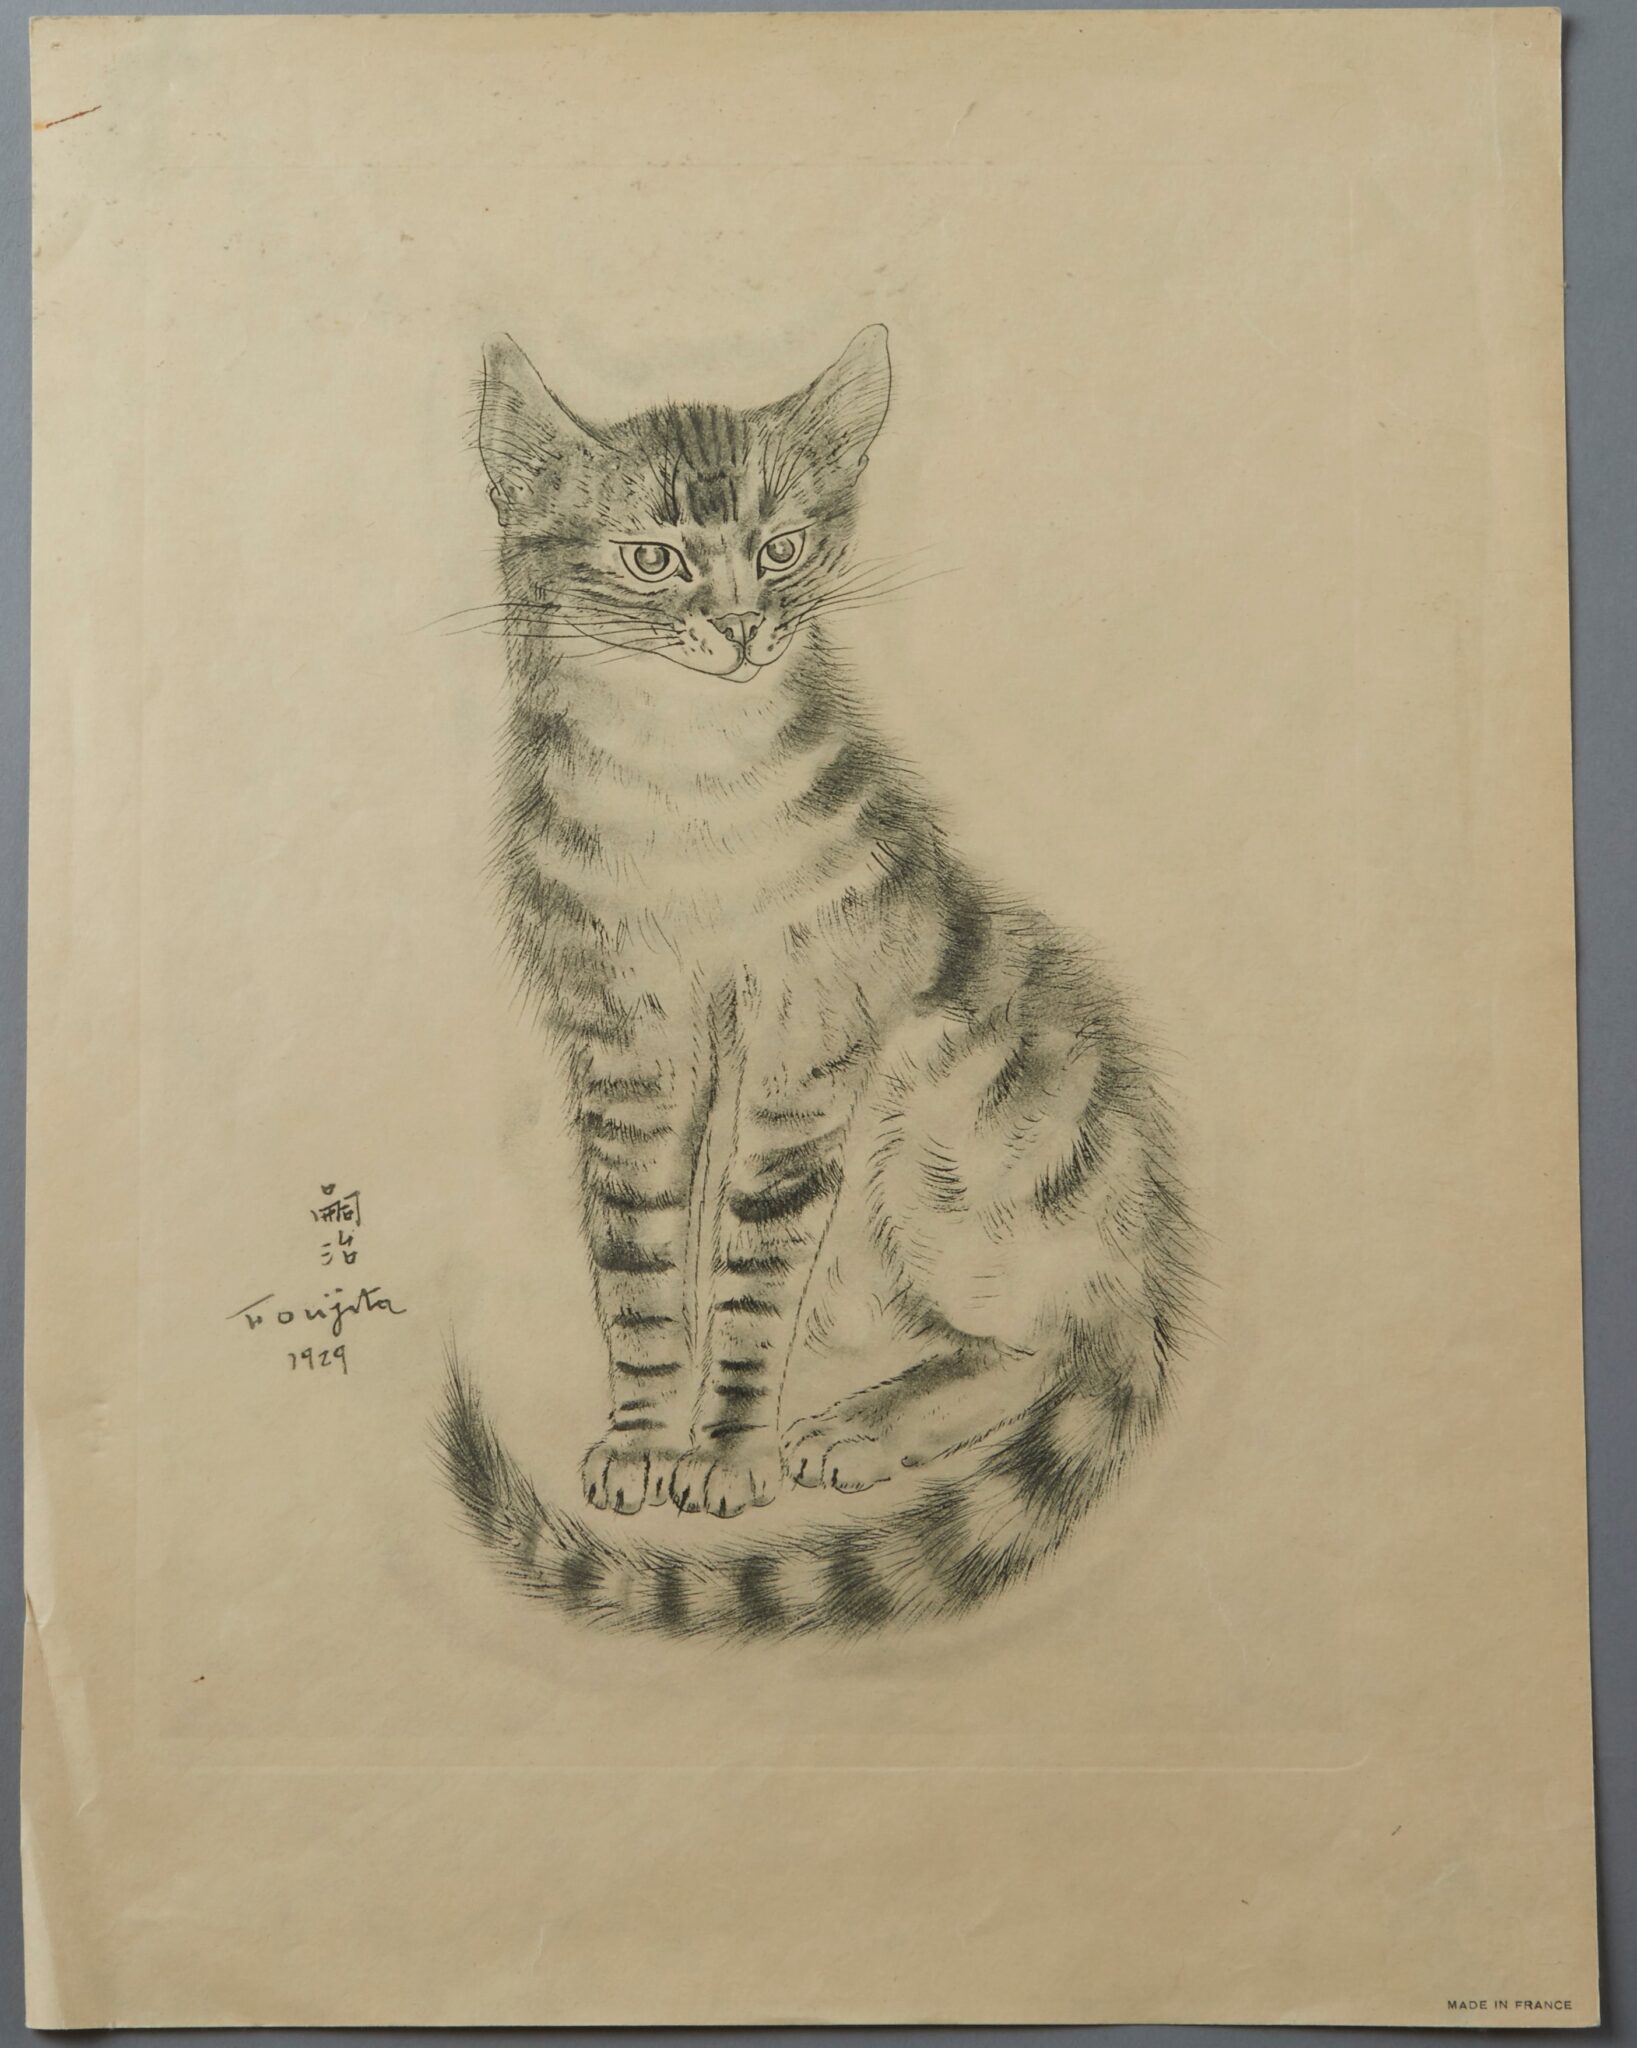 Leonard Tsuguharu Foujita "A Book of Cats"